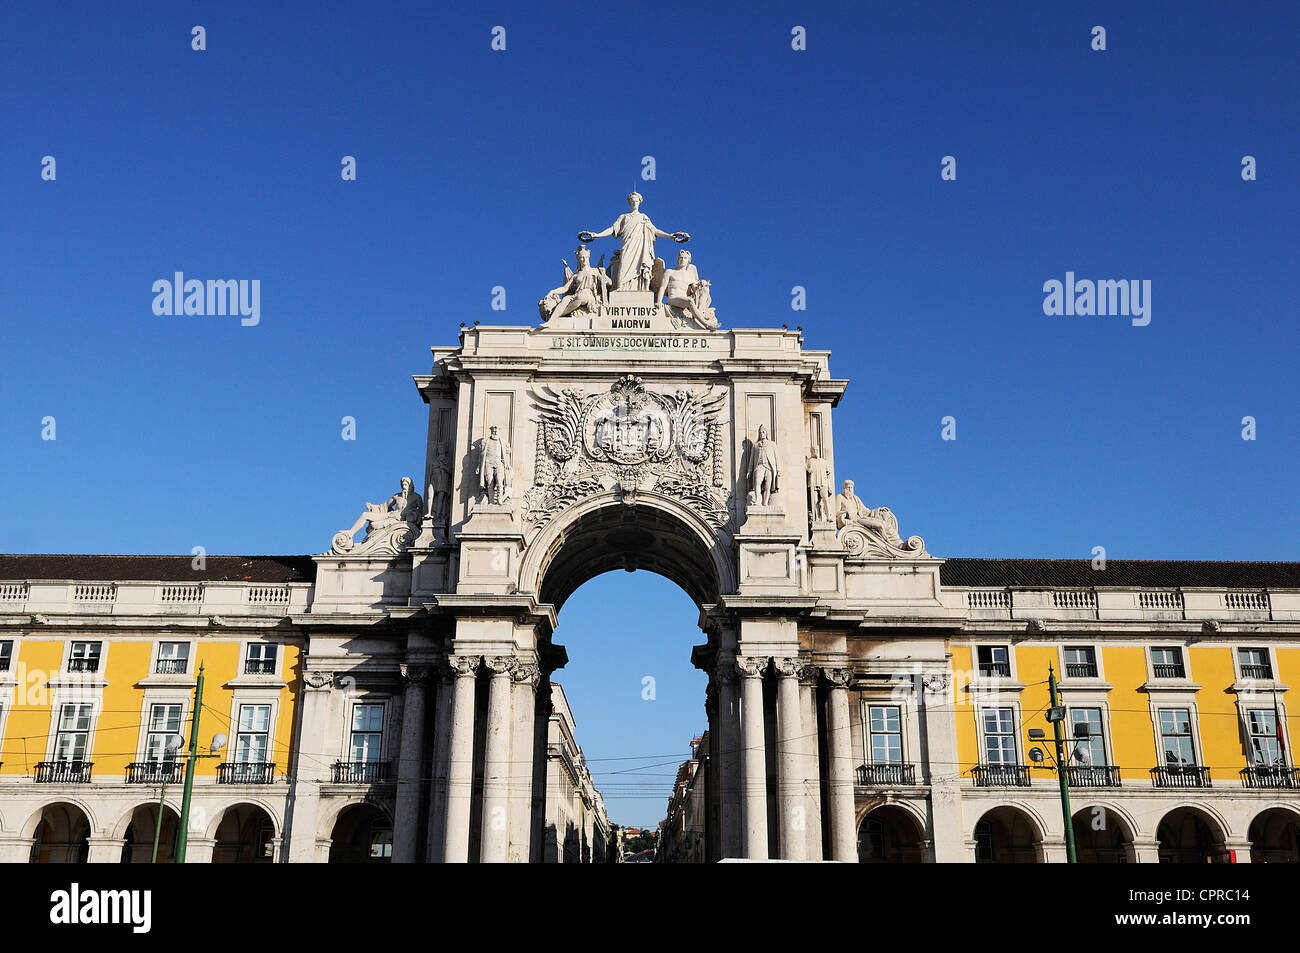 Famous arch at the Praca do Comercio showing Viriatus, Vasco da Gama, Pombal and Nuno Alvares Pereira Stock Photo